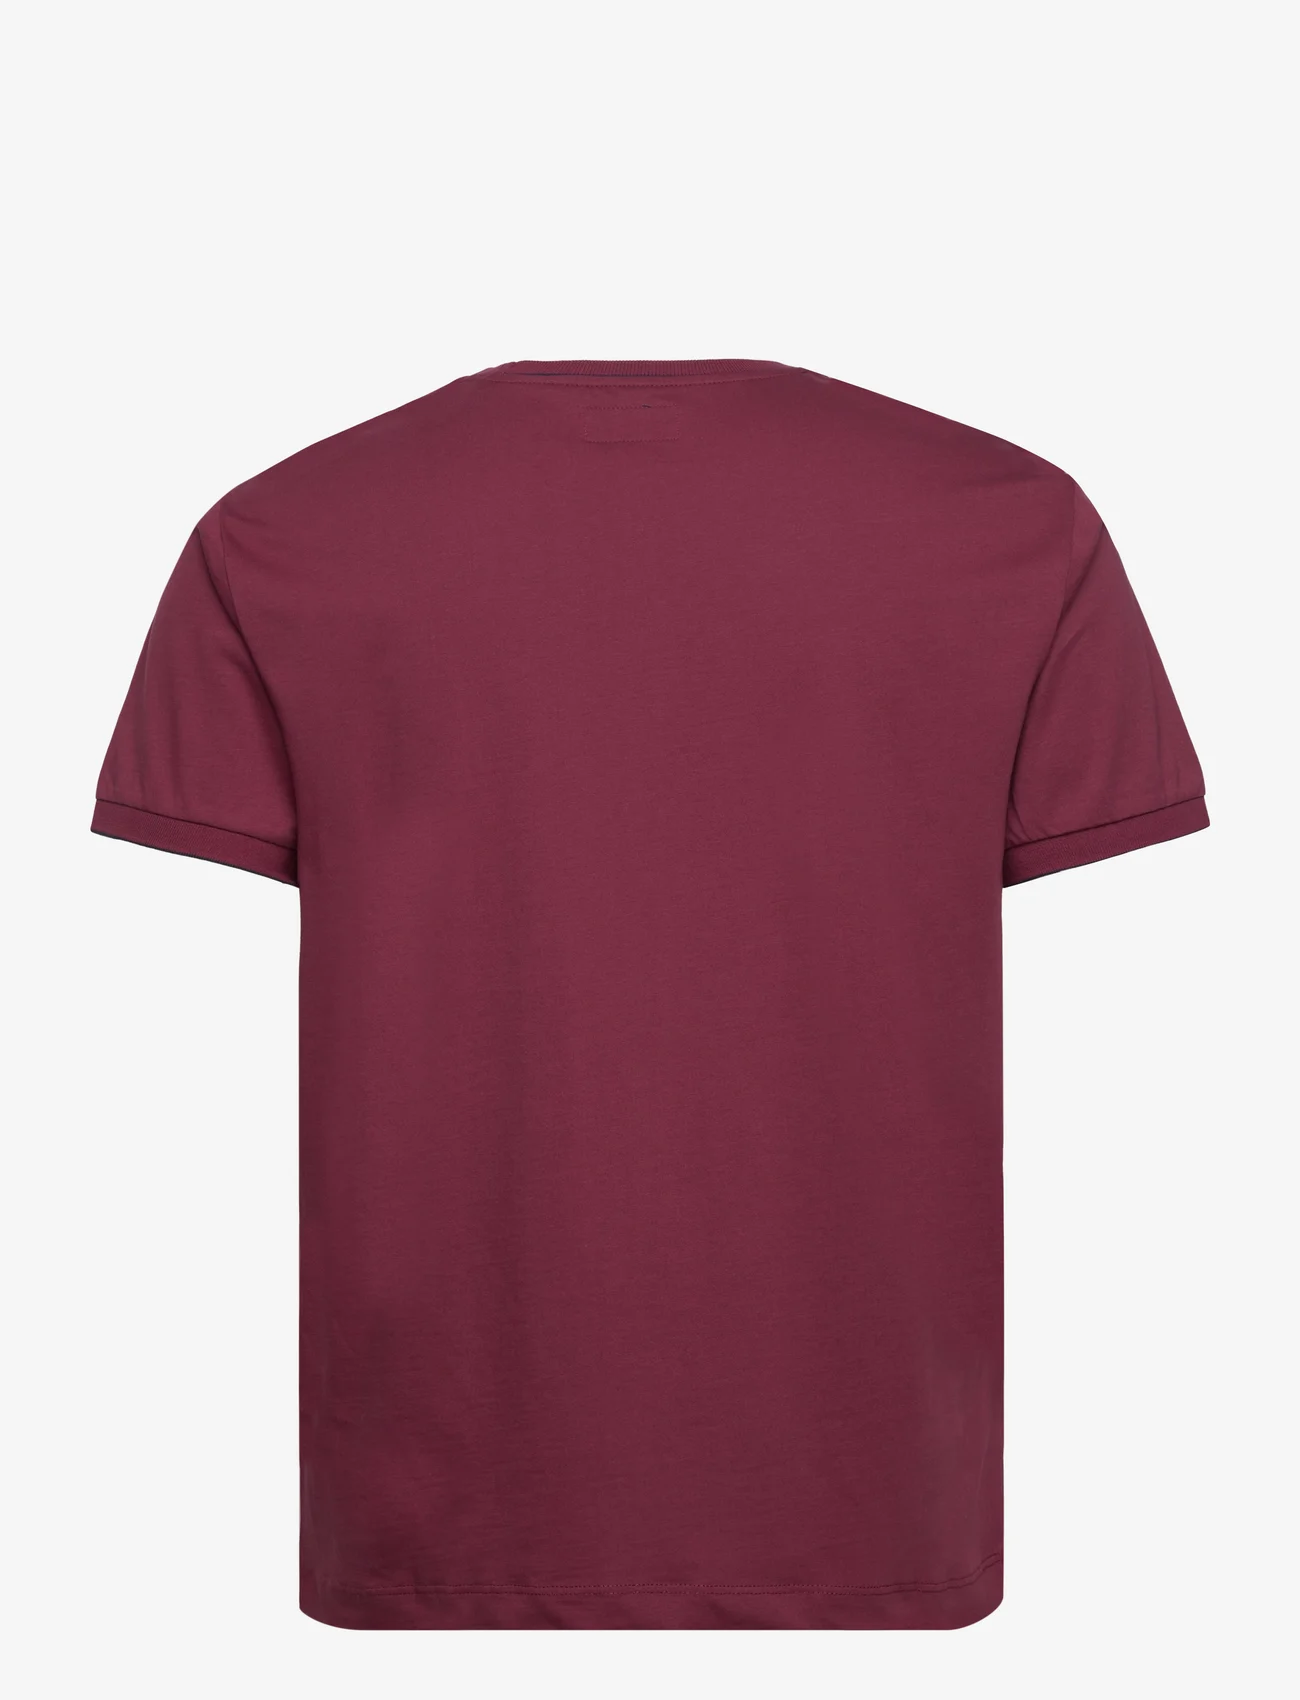 Hackett London - JERSEY TIPPED TEE - kortærmede t-shirts - berry purple - 1